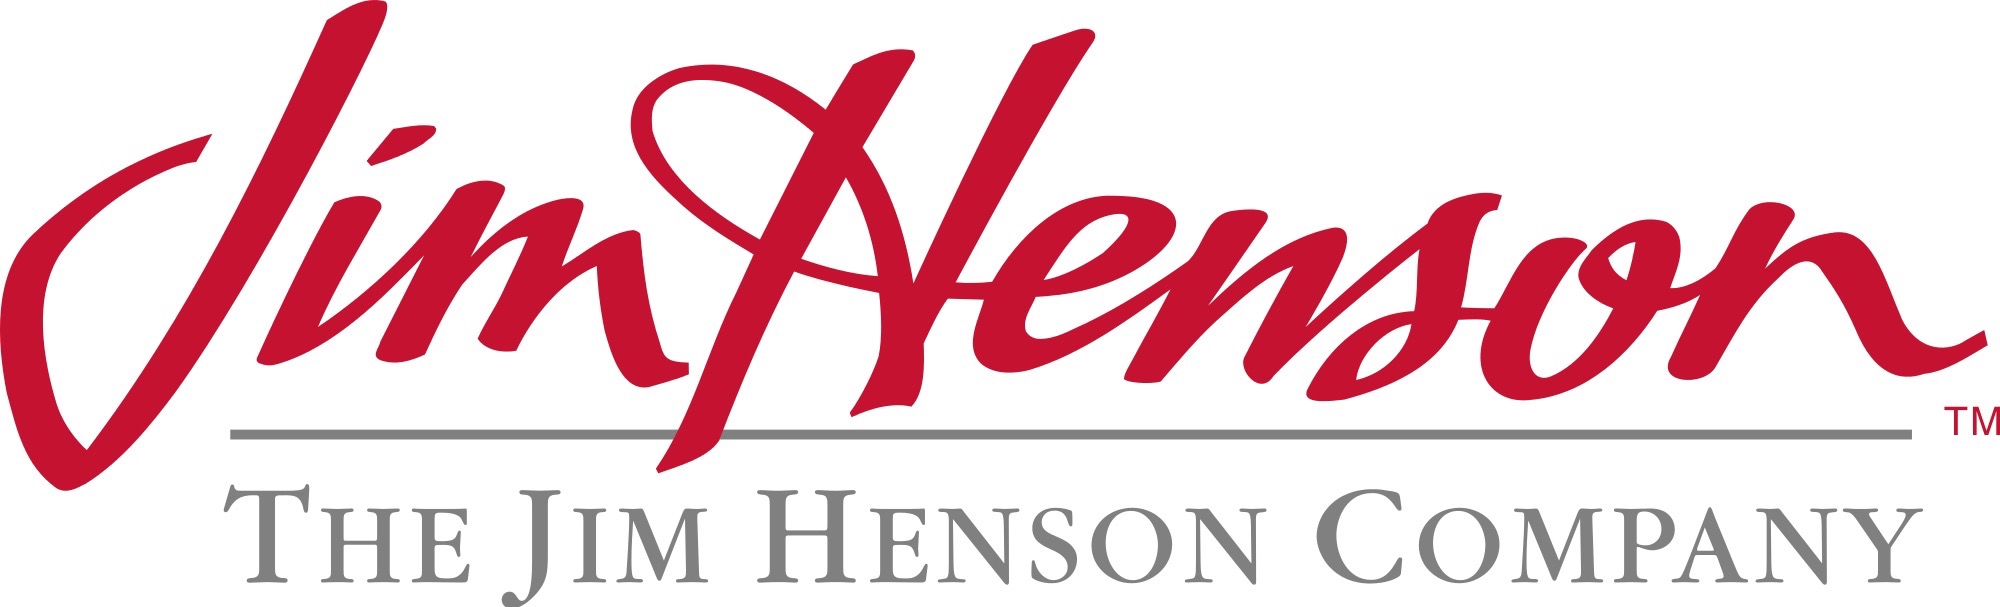 2000px-The_Jim_Henson_Company_logo.svg.jpg